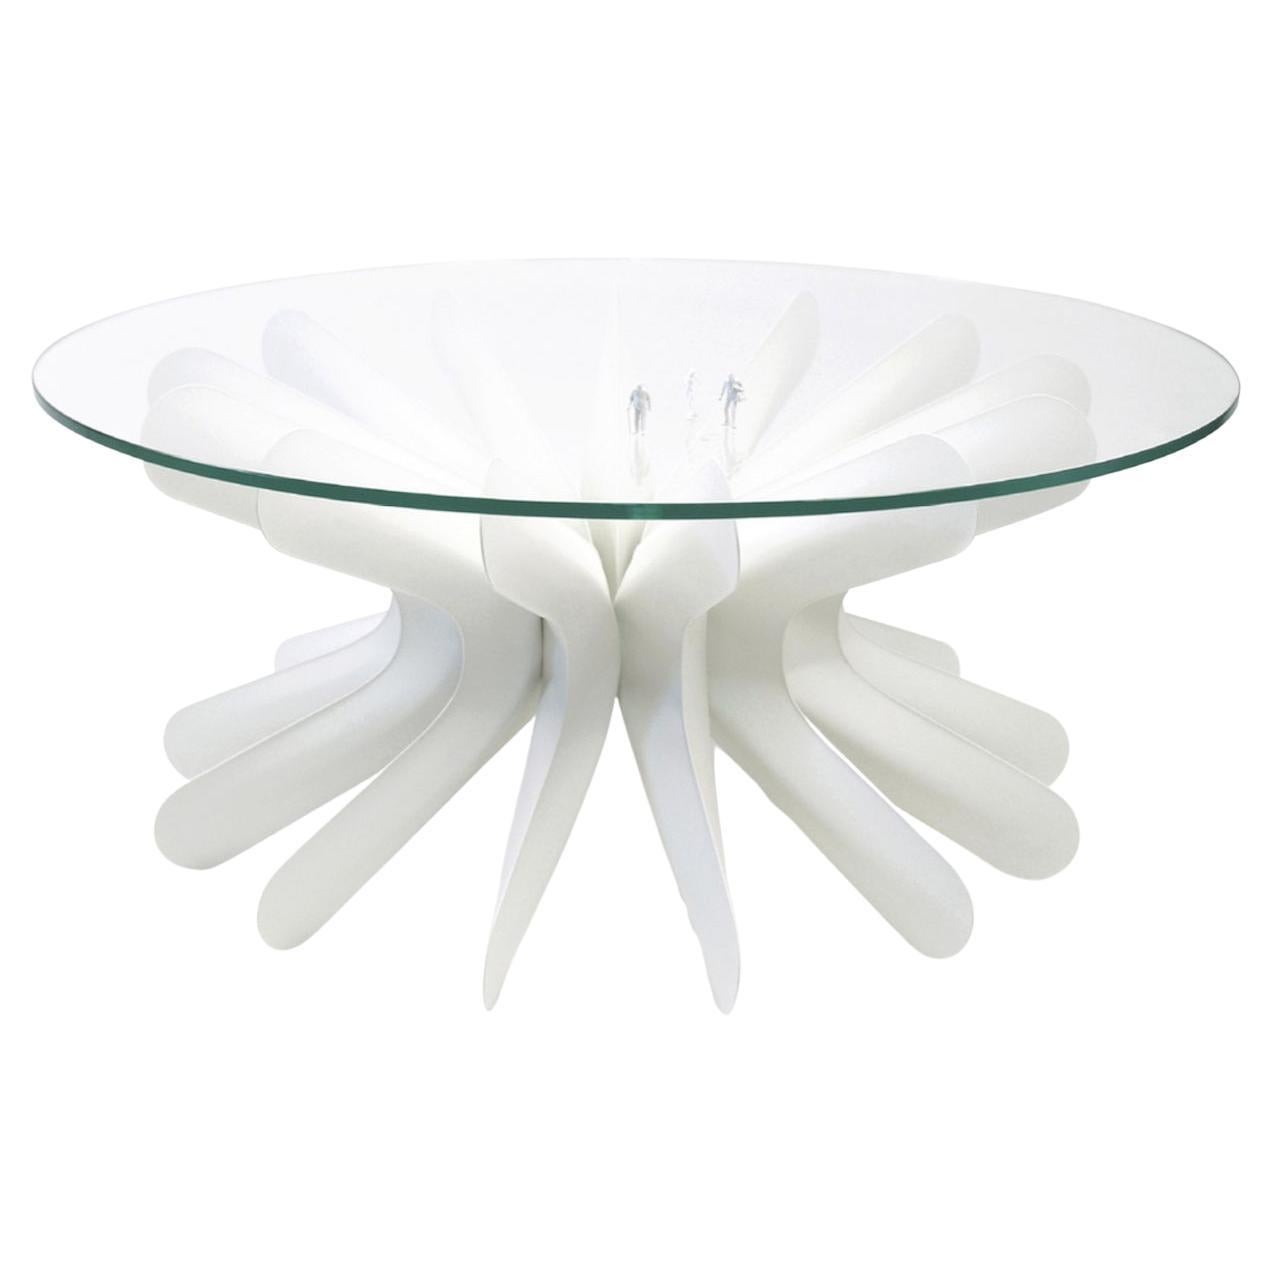 Contemporary Coffee Table 'Steel in Rotation No. 1' by Zieta, Small, White Matt